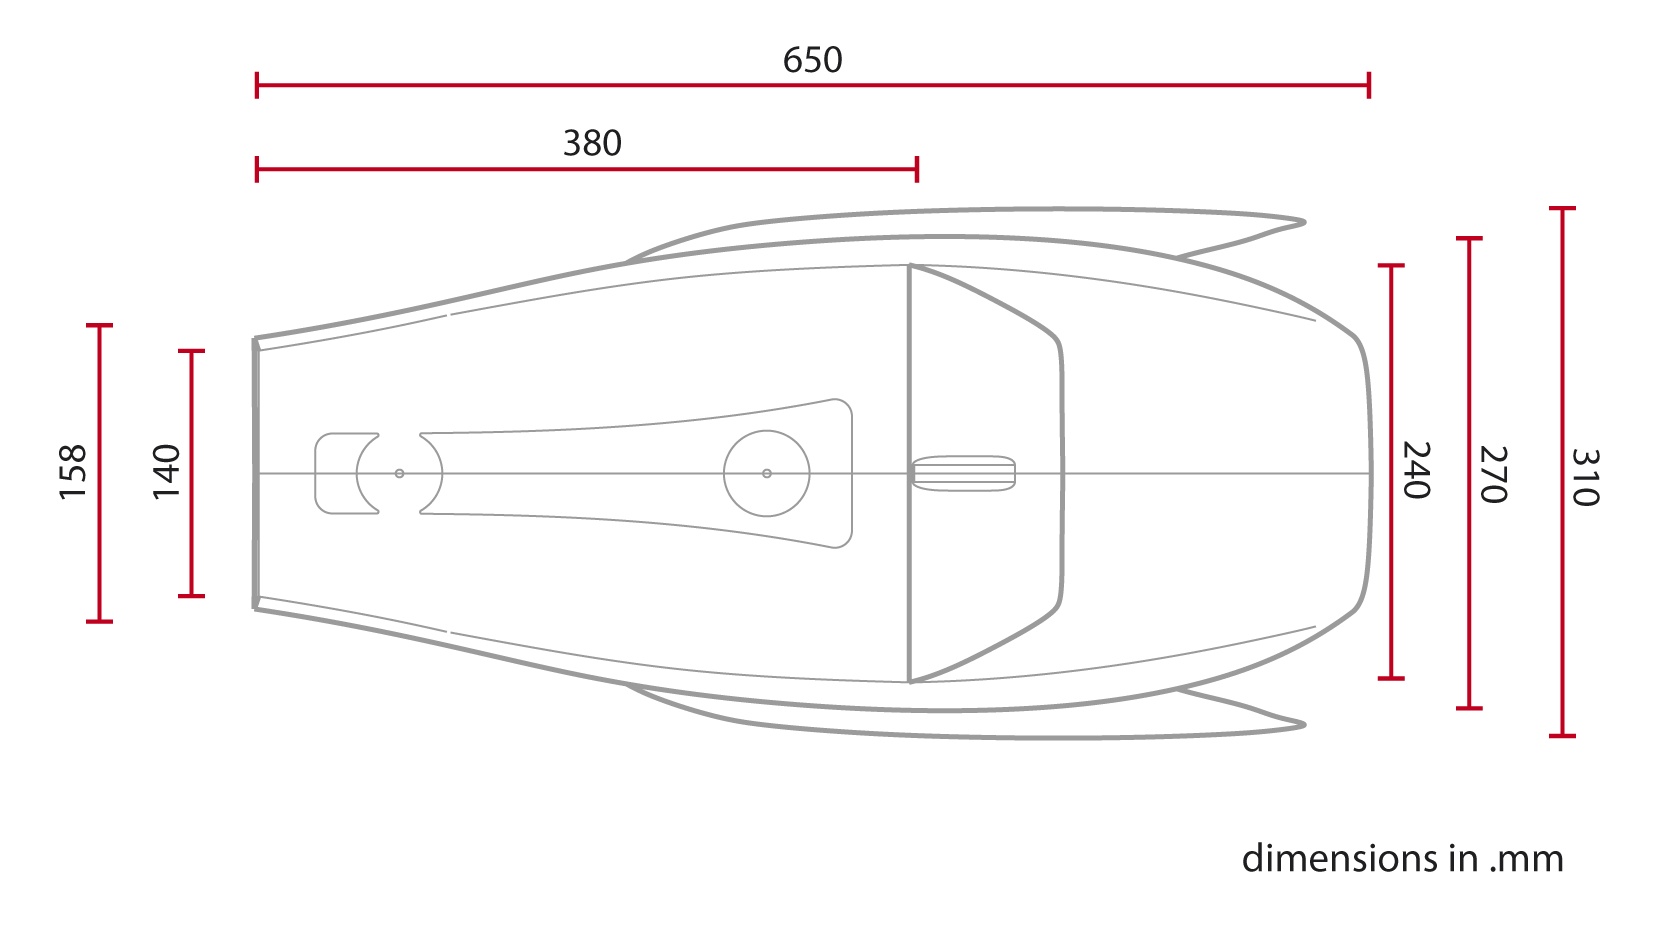 "F-Racer" Universal Flat Track seat (black)